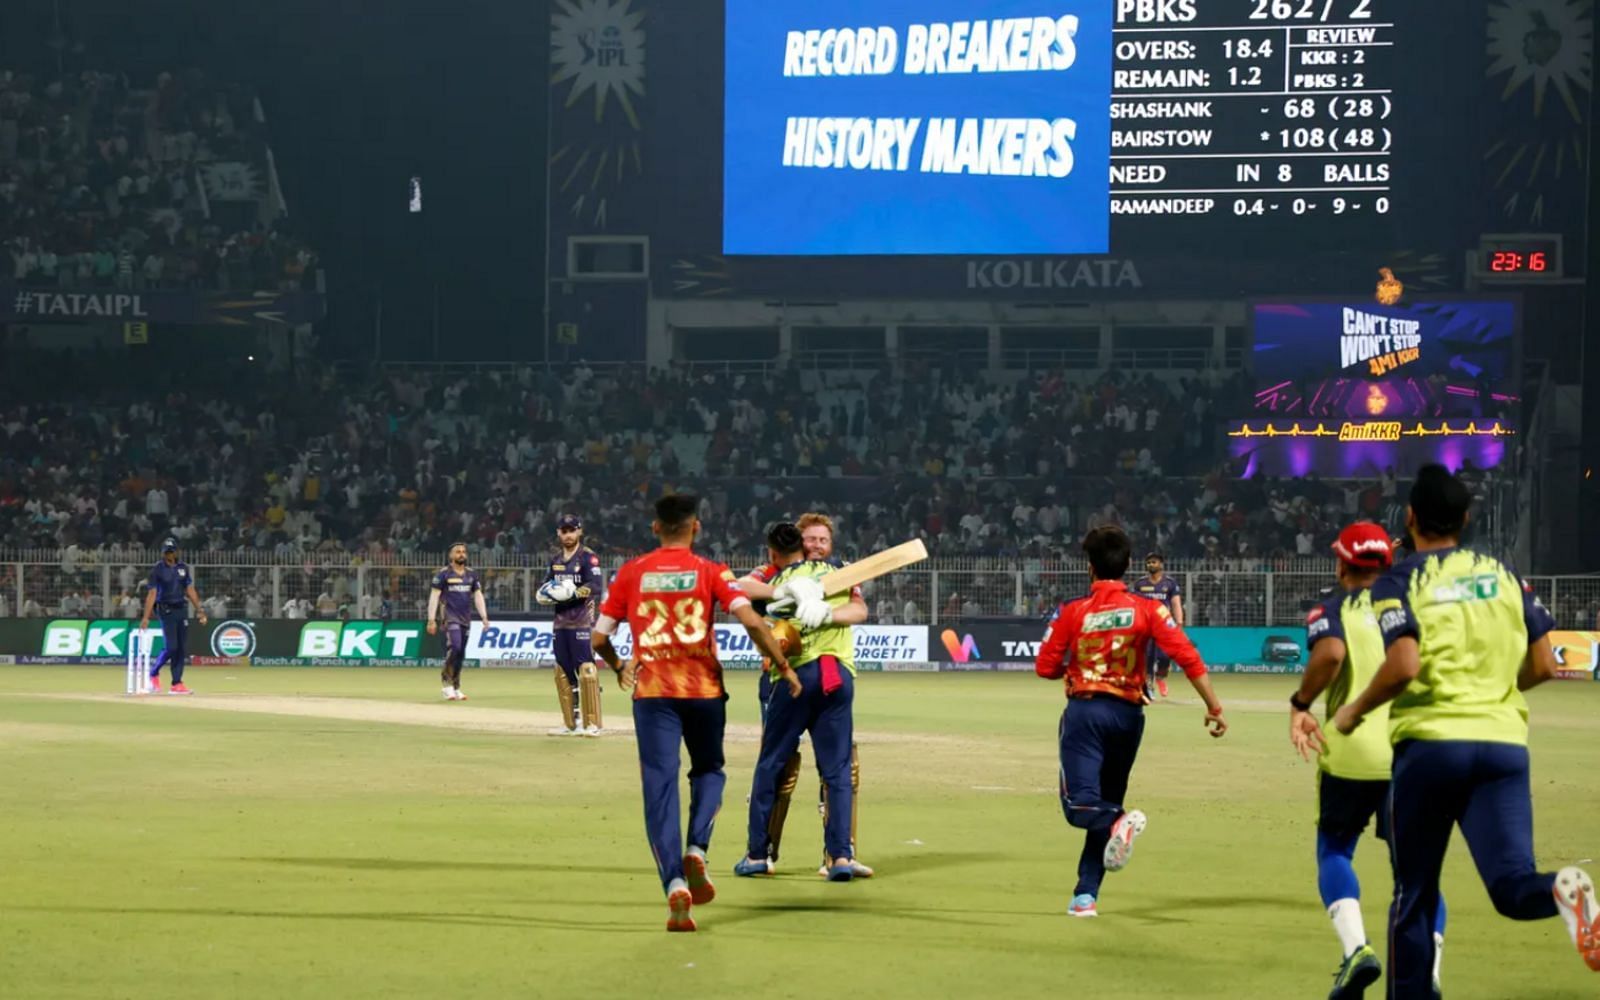 PBKS sealed the highest-ever T20 chase of 262 against KKR on Friday (Image: BCCI/IPL)